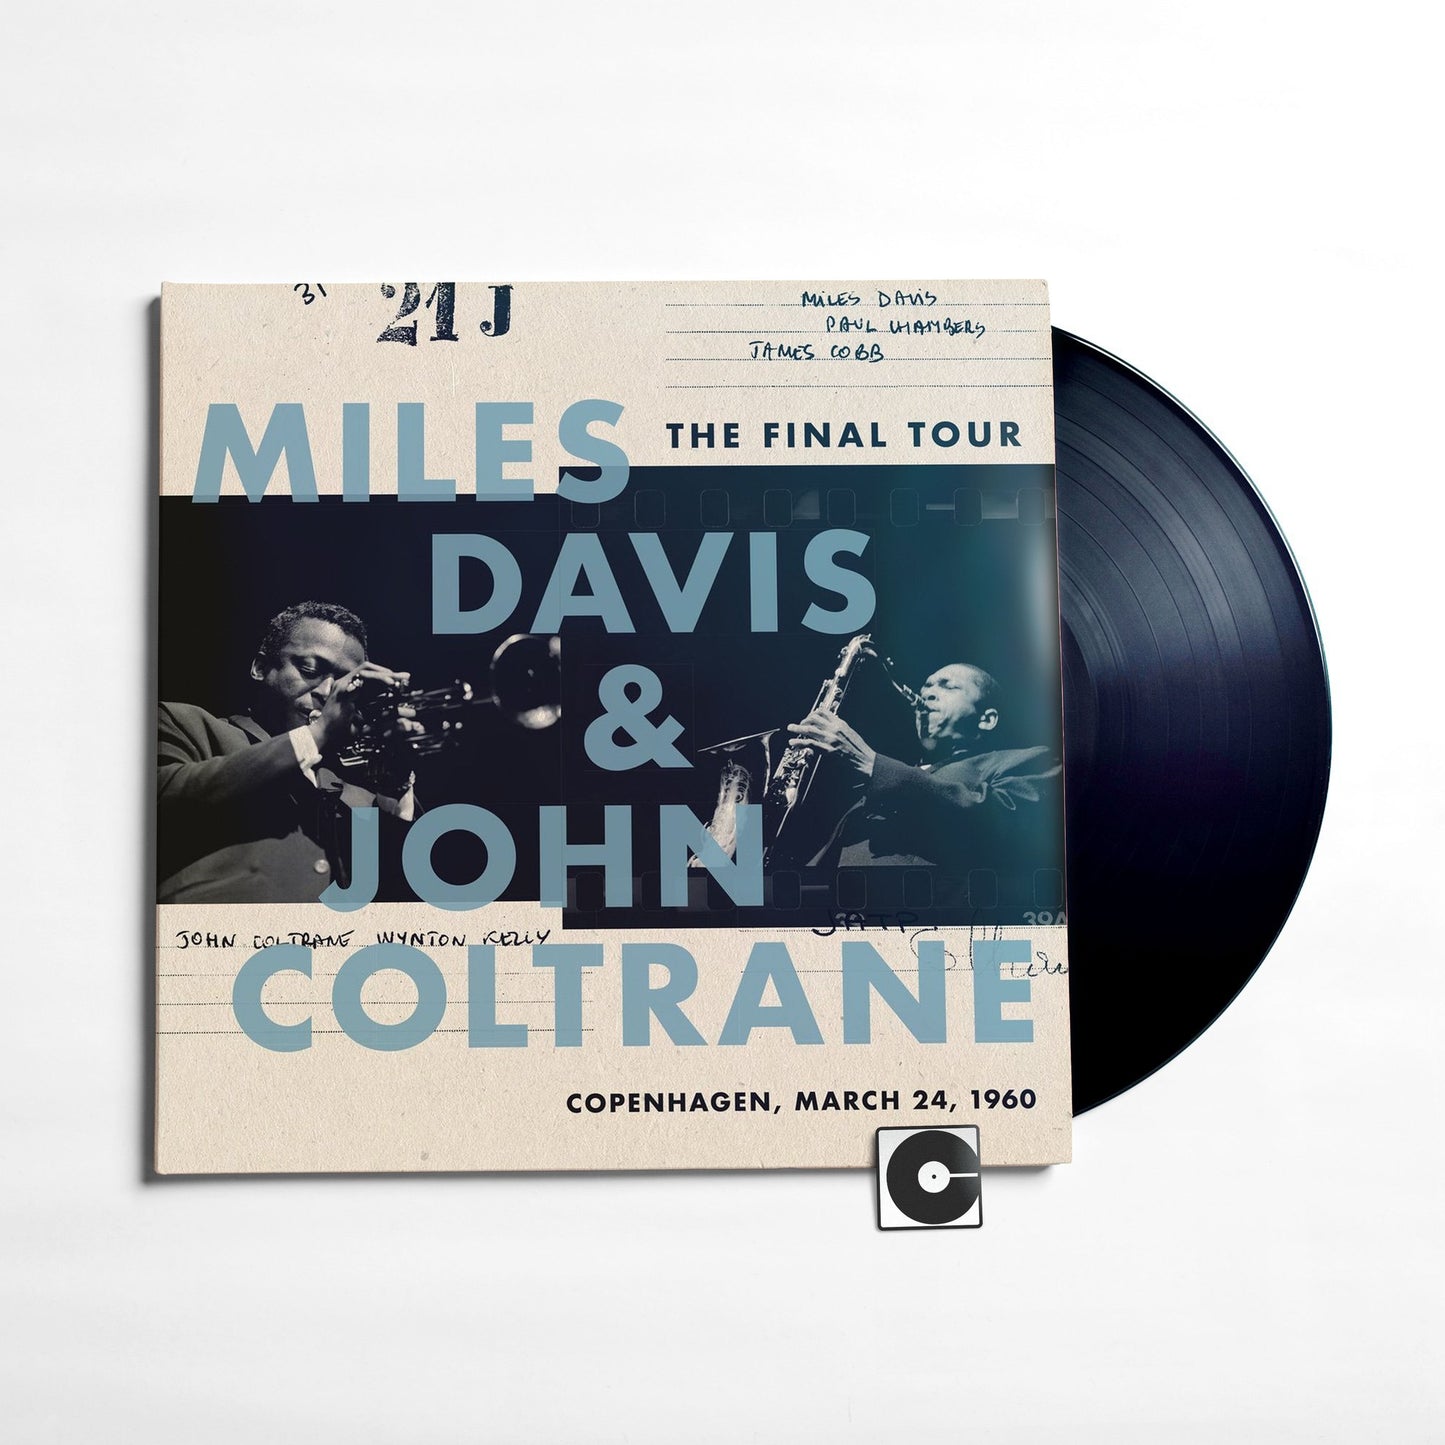 Miles Davis - "Miles Davis & John Coltrane The Final Tour"